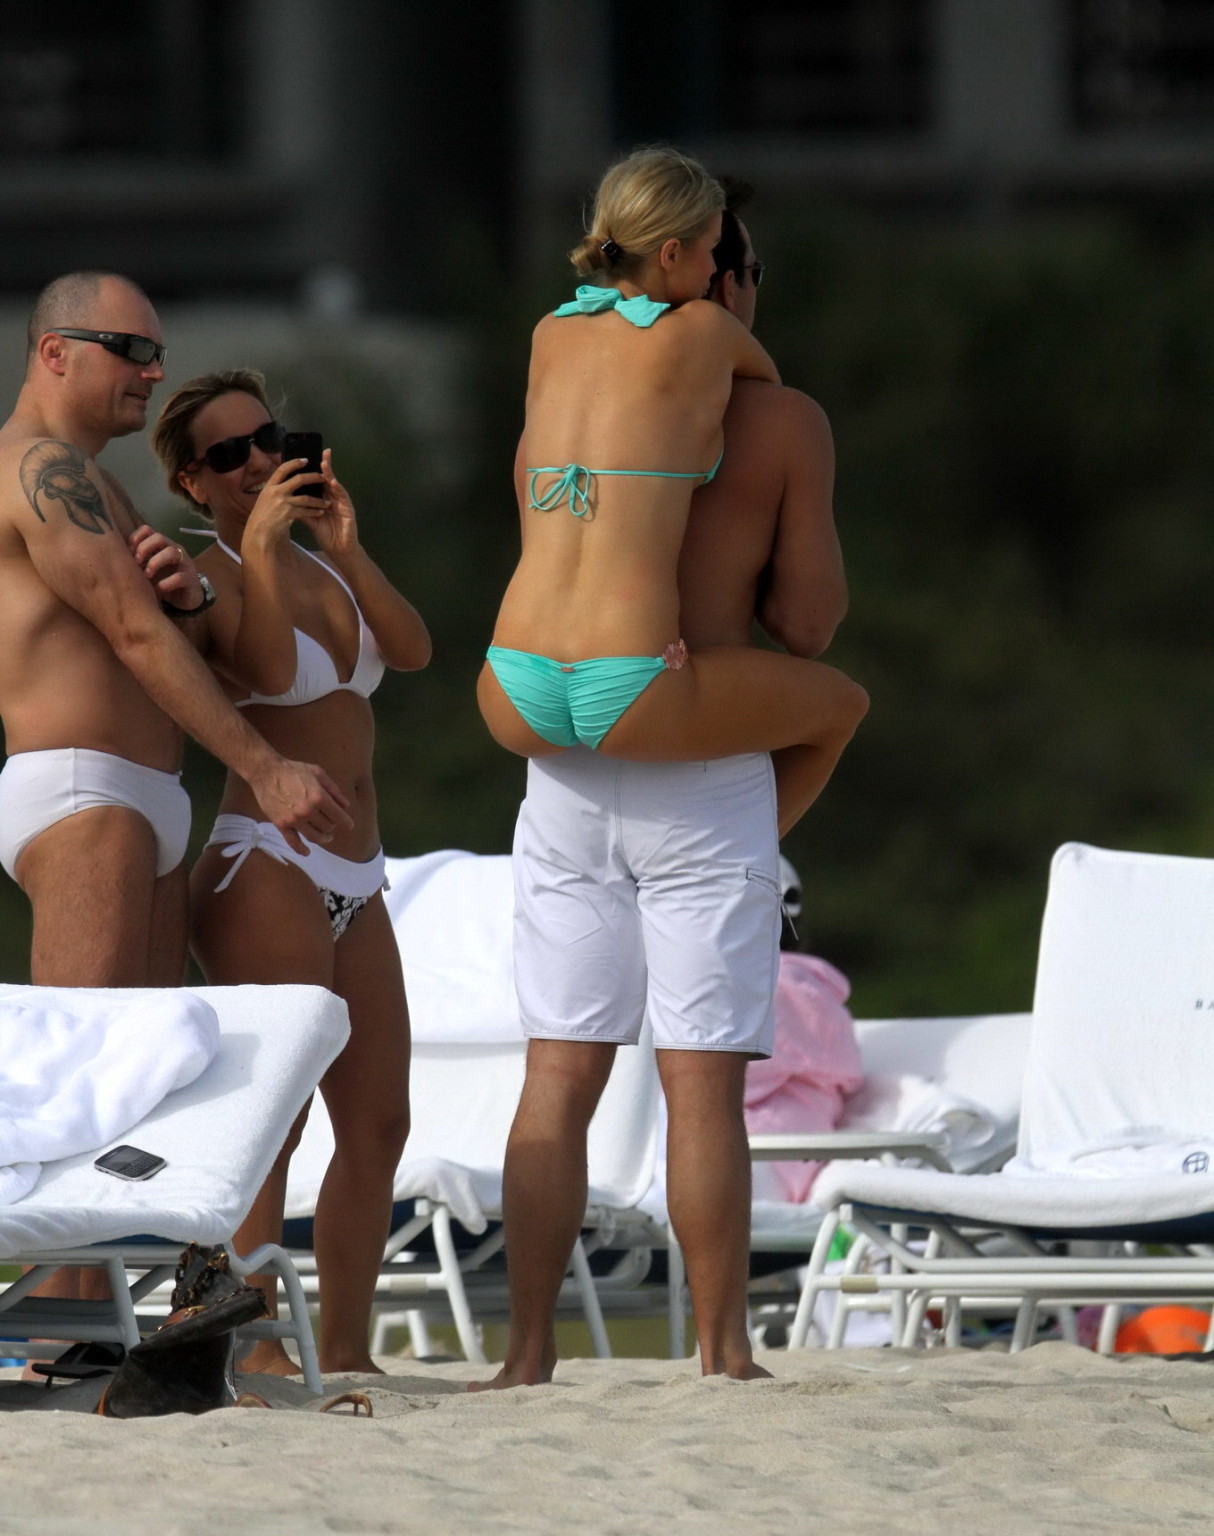 Joanna Krupa shows off her bikini body while playing arround with her boyfriend  #75244729